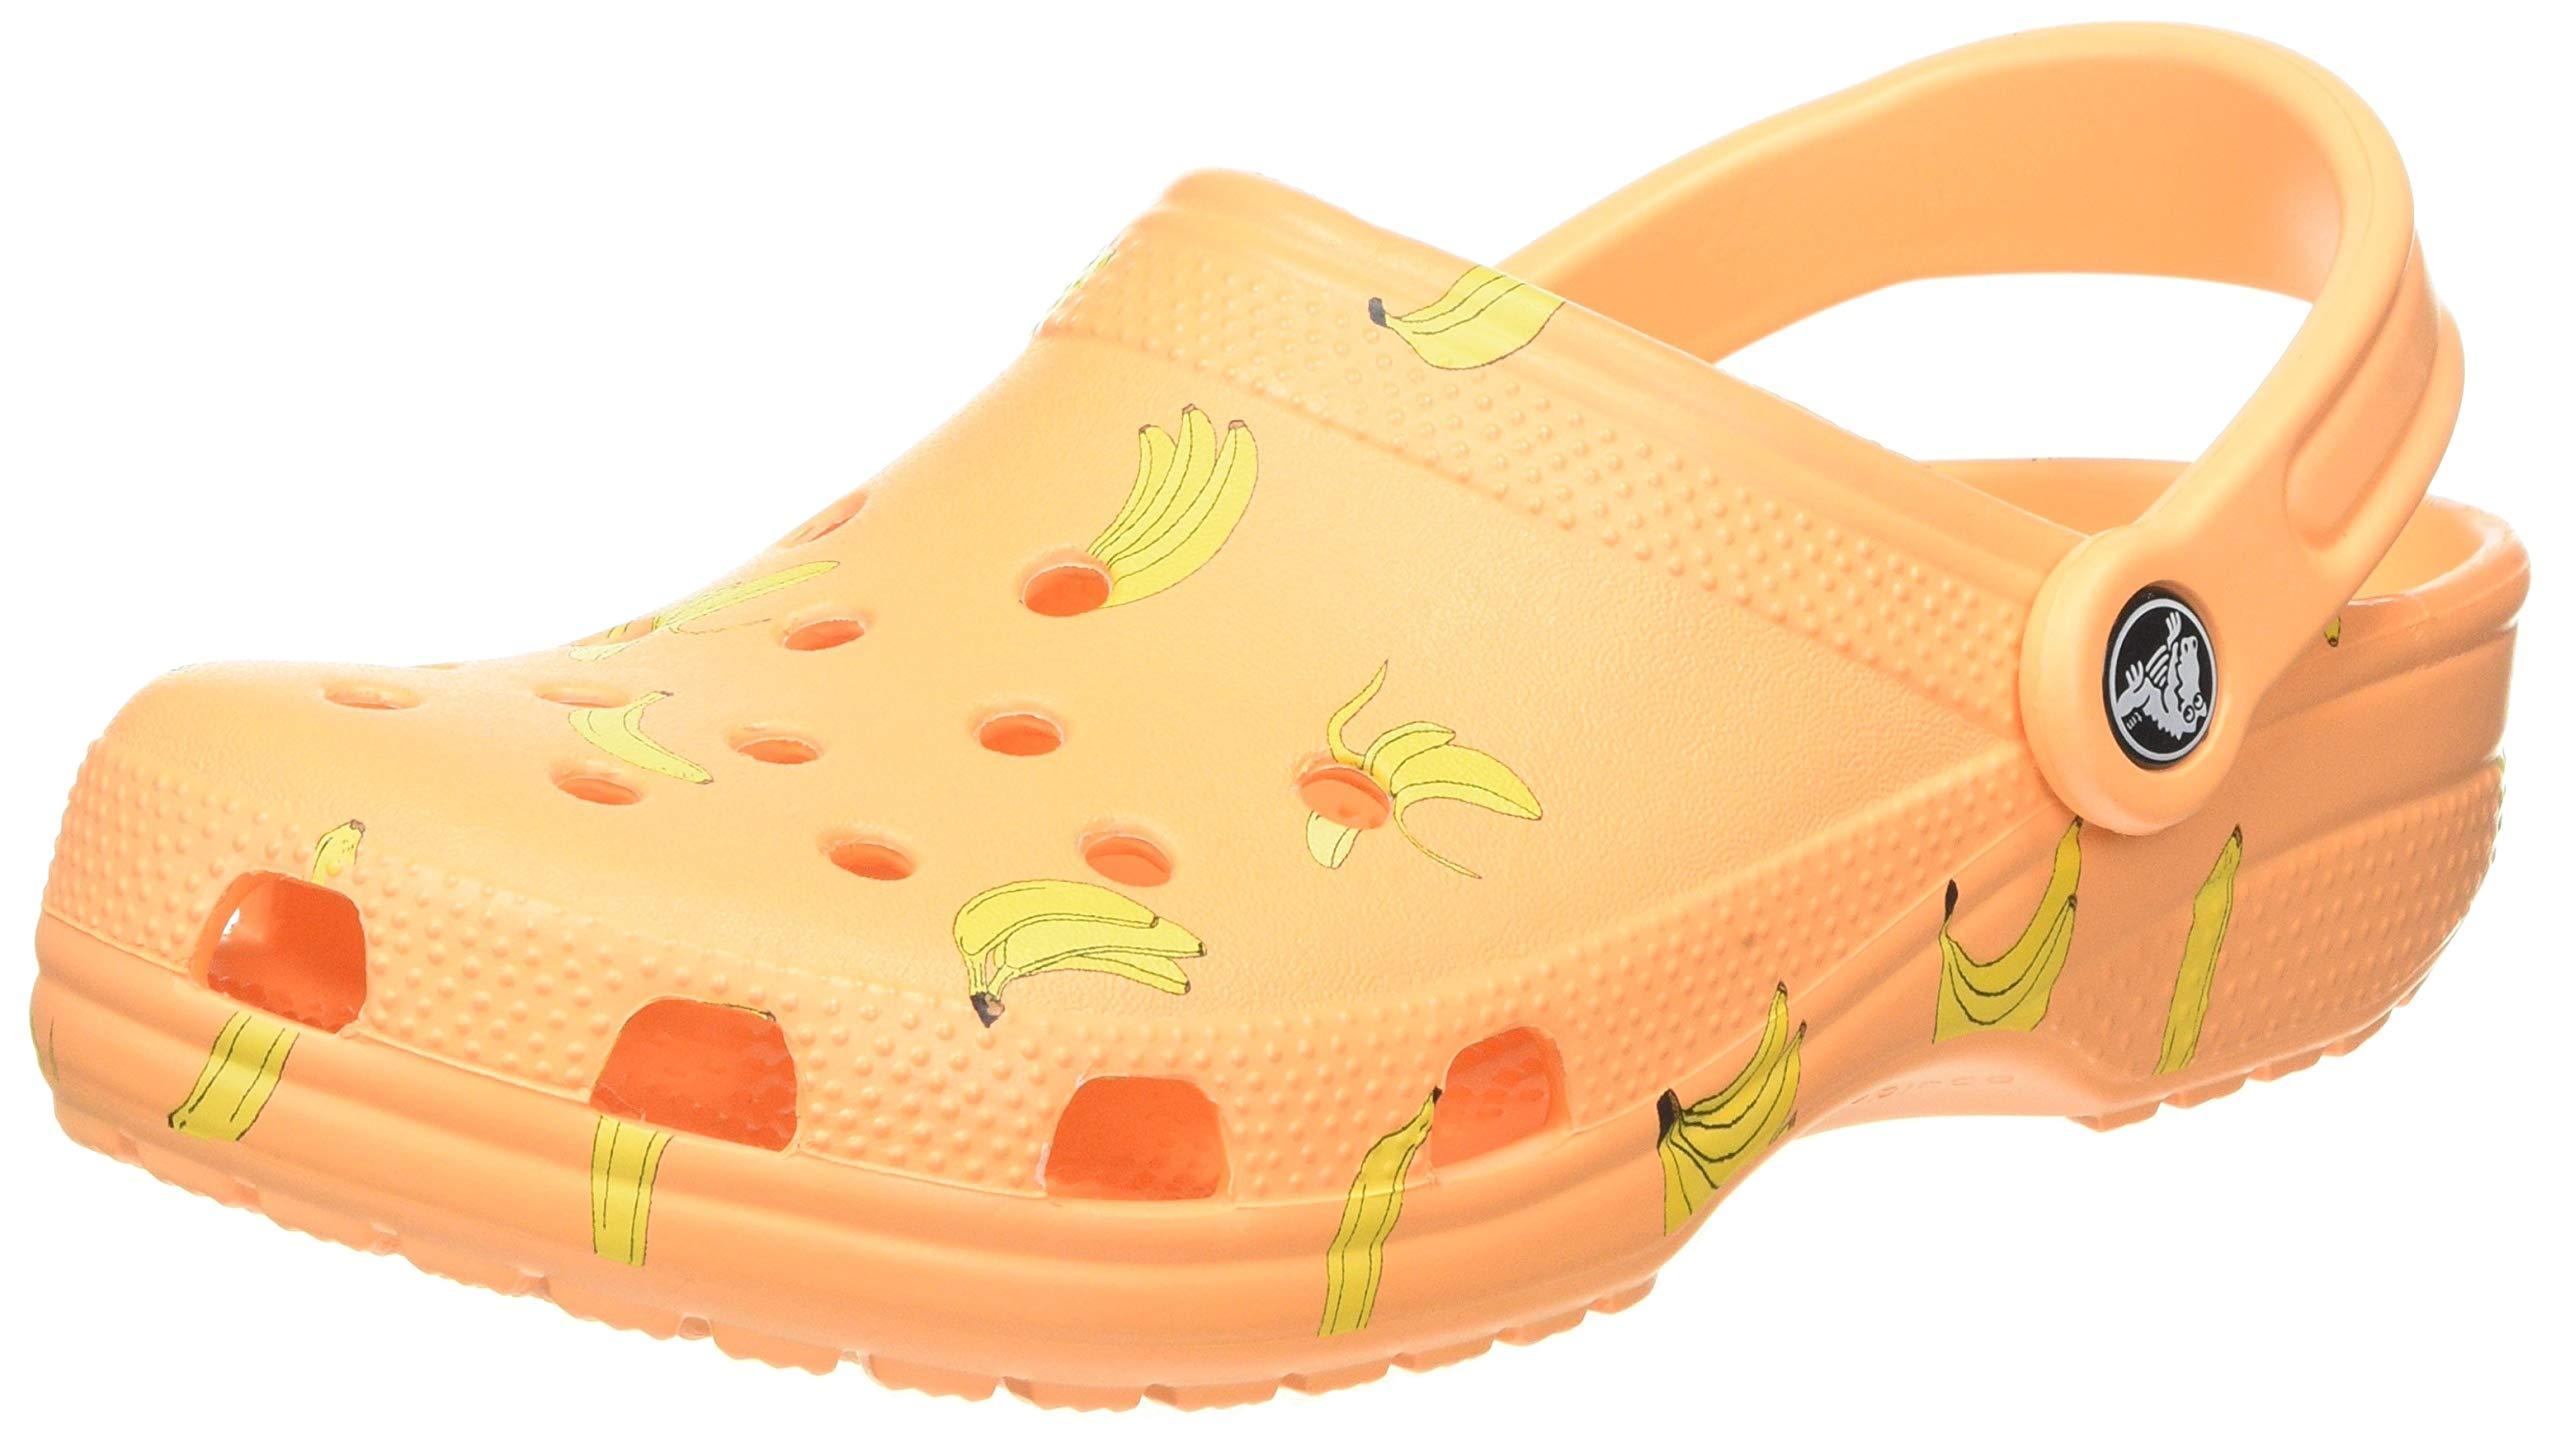 crocs with bananas on them